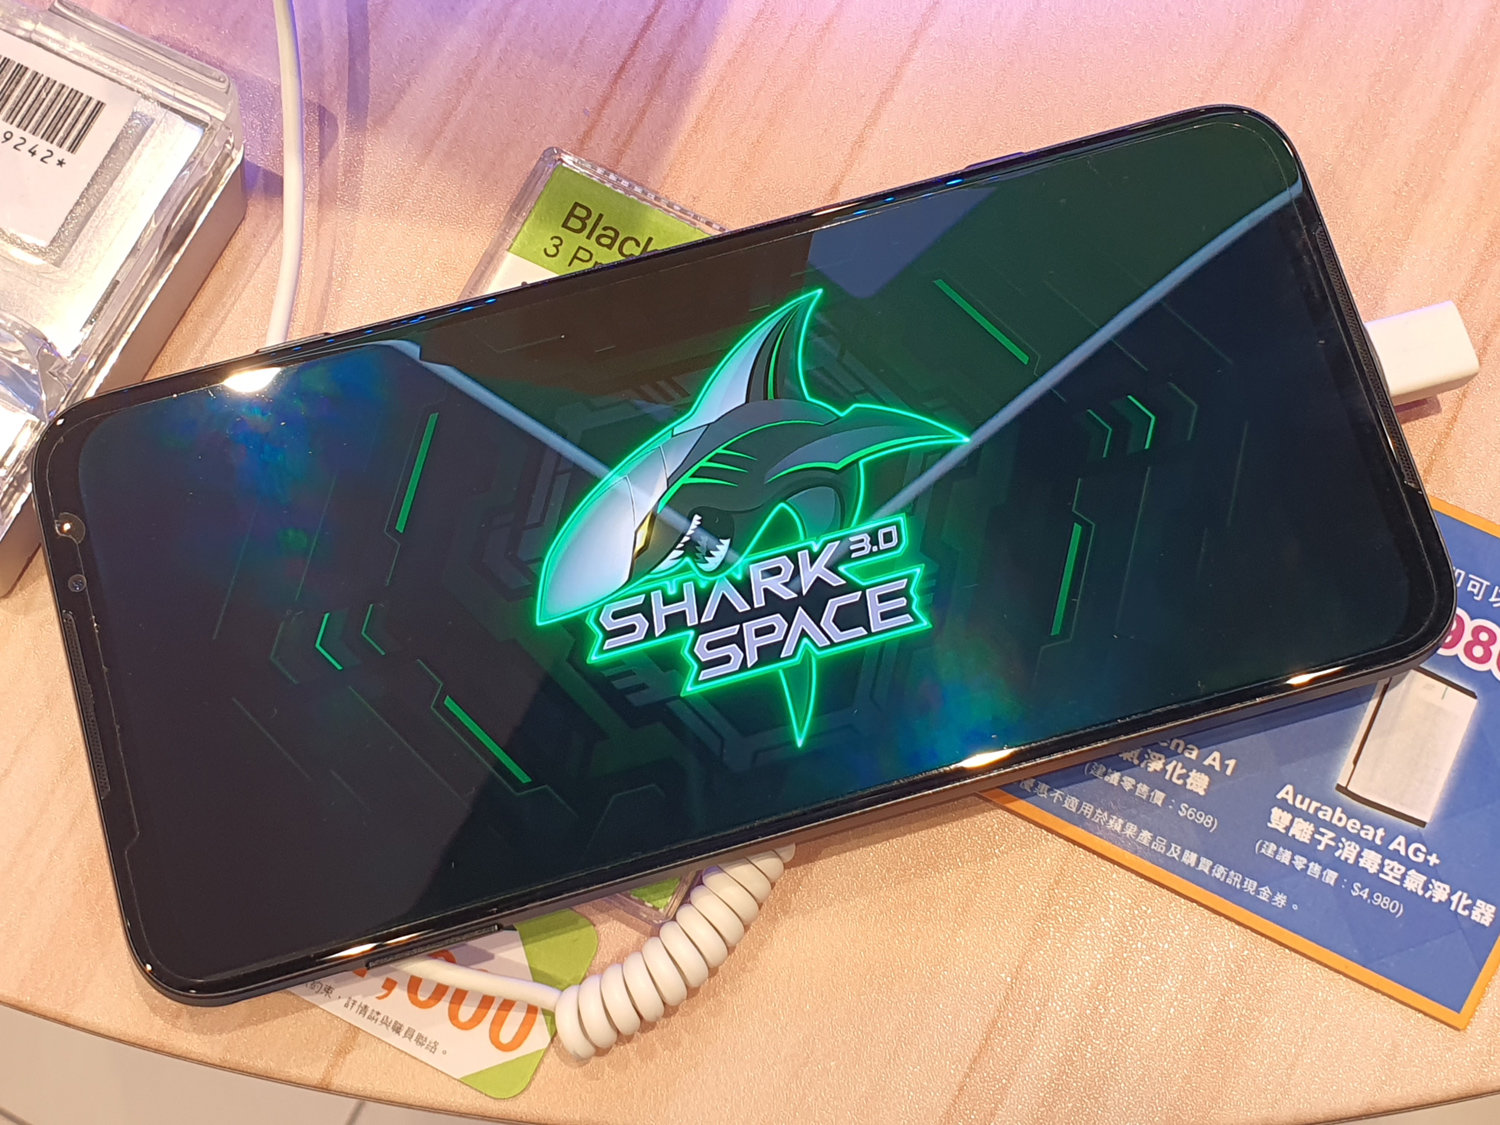 BlackShark3 5Gゲーミングスマホ SIMフリー日本語版 - スマートフォン本体